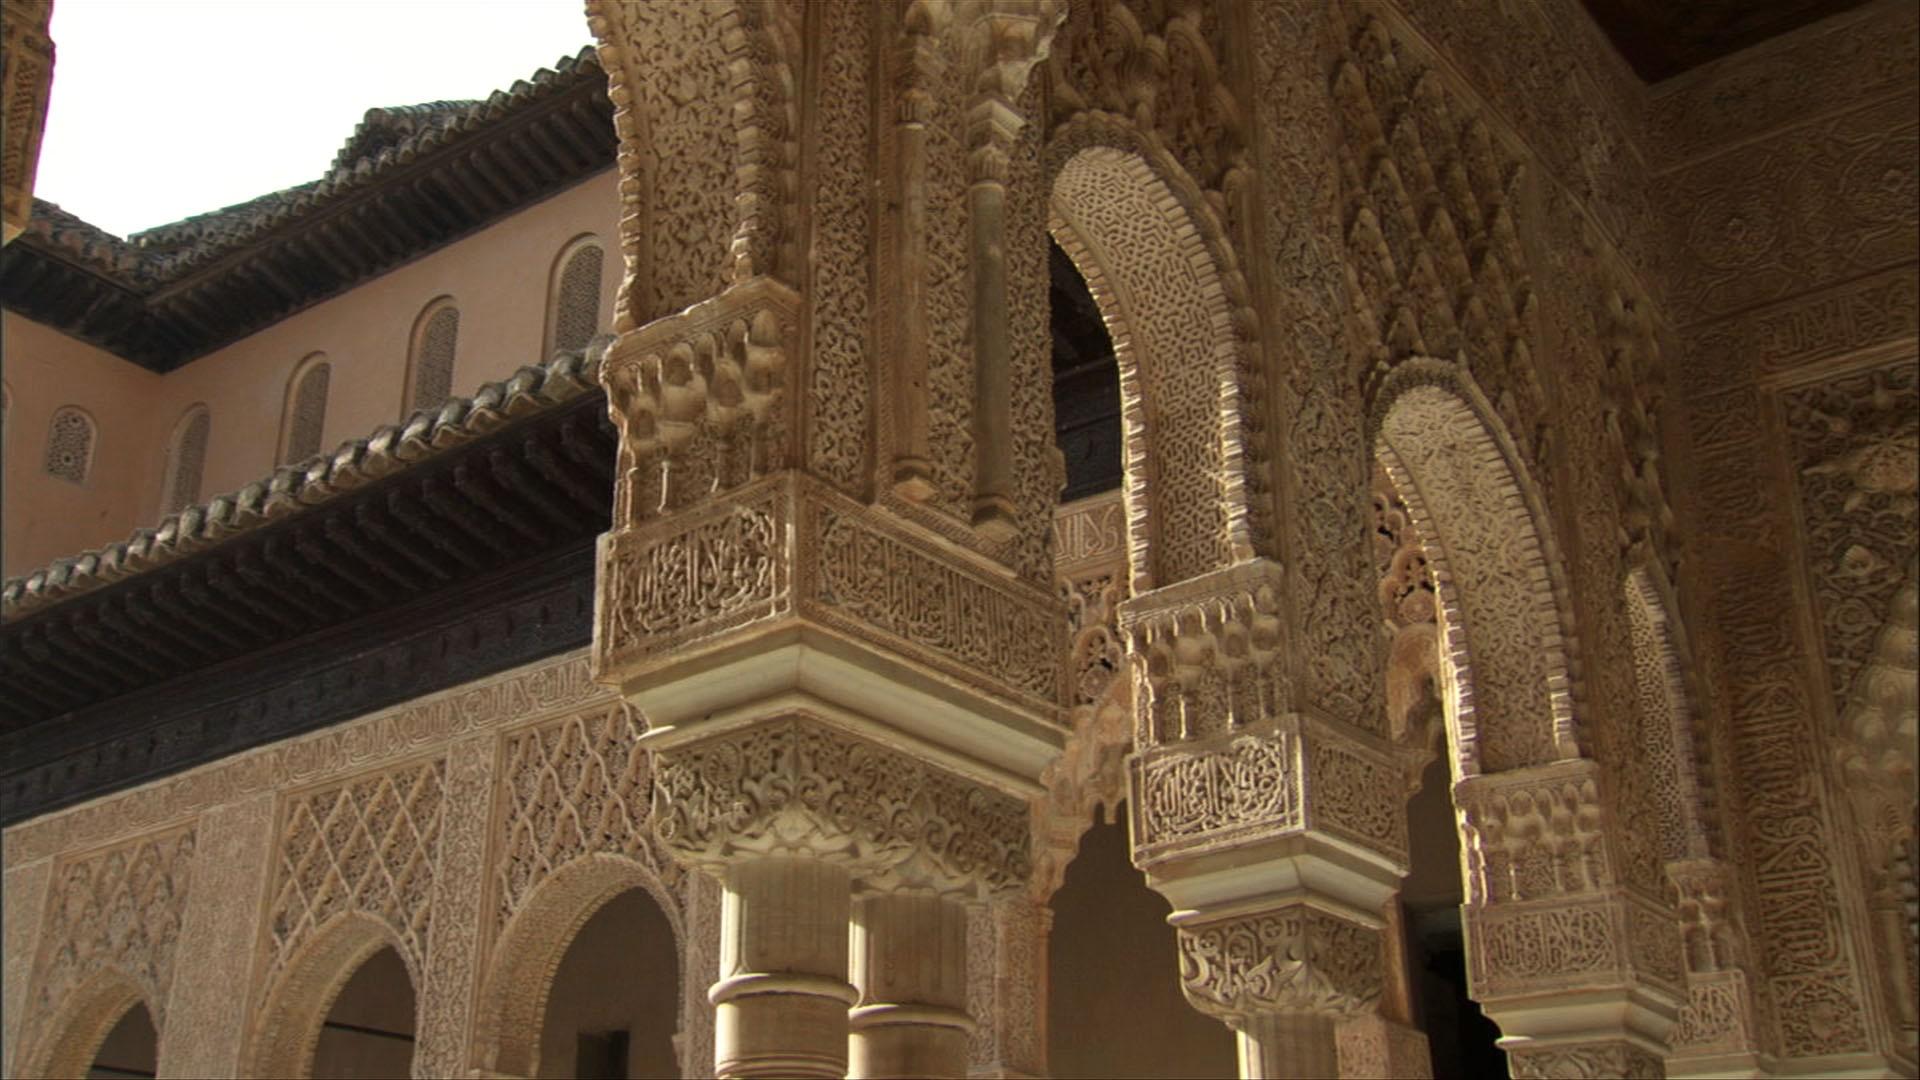 Image of Alhambra palace